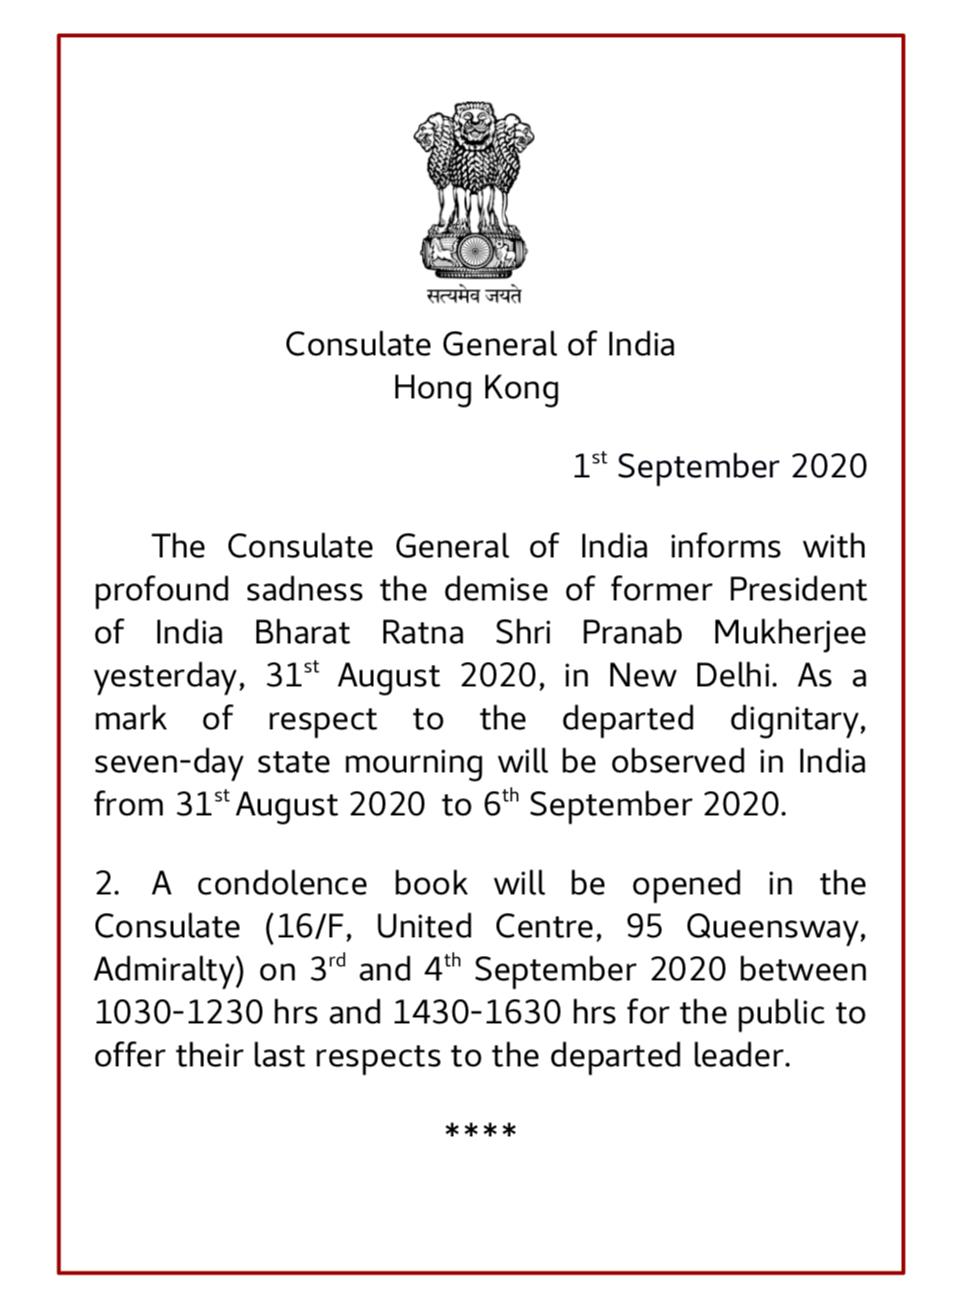 Opening of Condolence Book to pay last respects to former President of India Bharat Ratna Shri Pranab Mukherjee